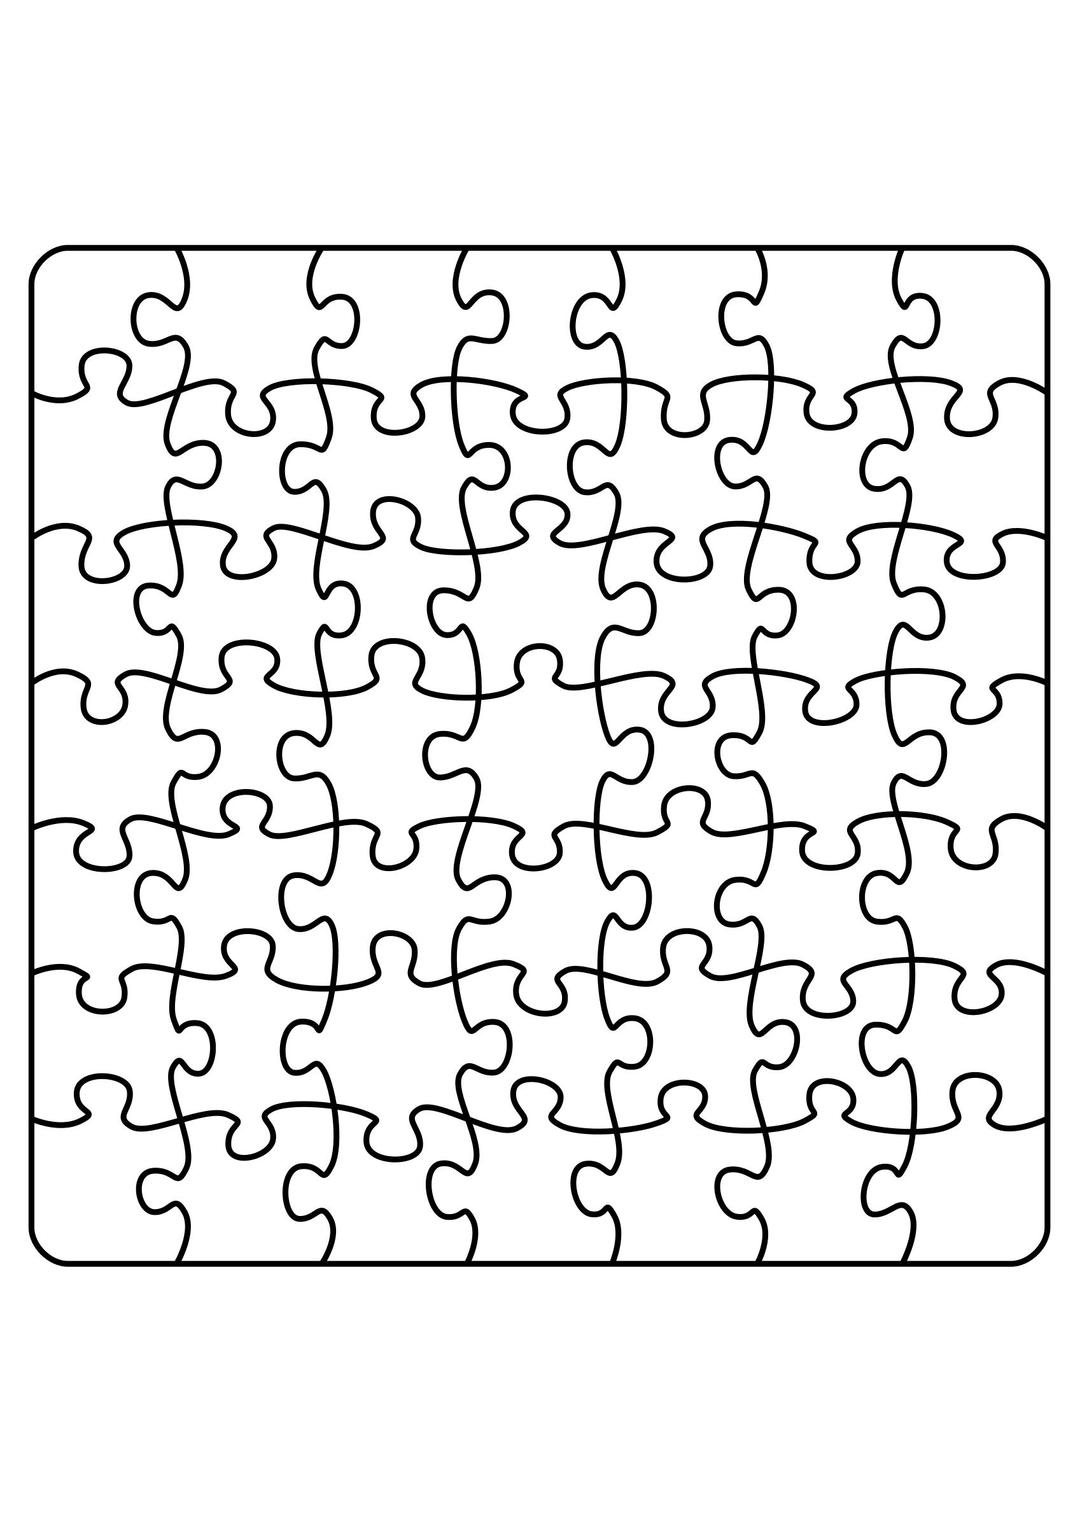 Jigsaw Puzzle A4 7 x 7 png transparent